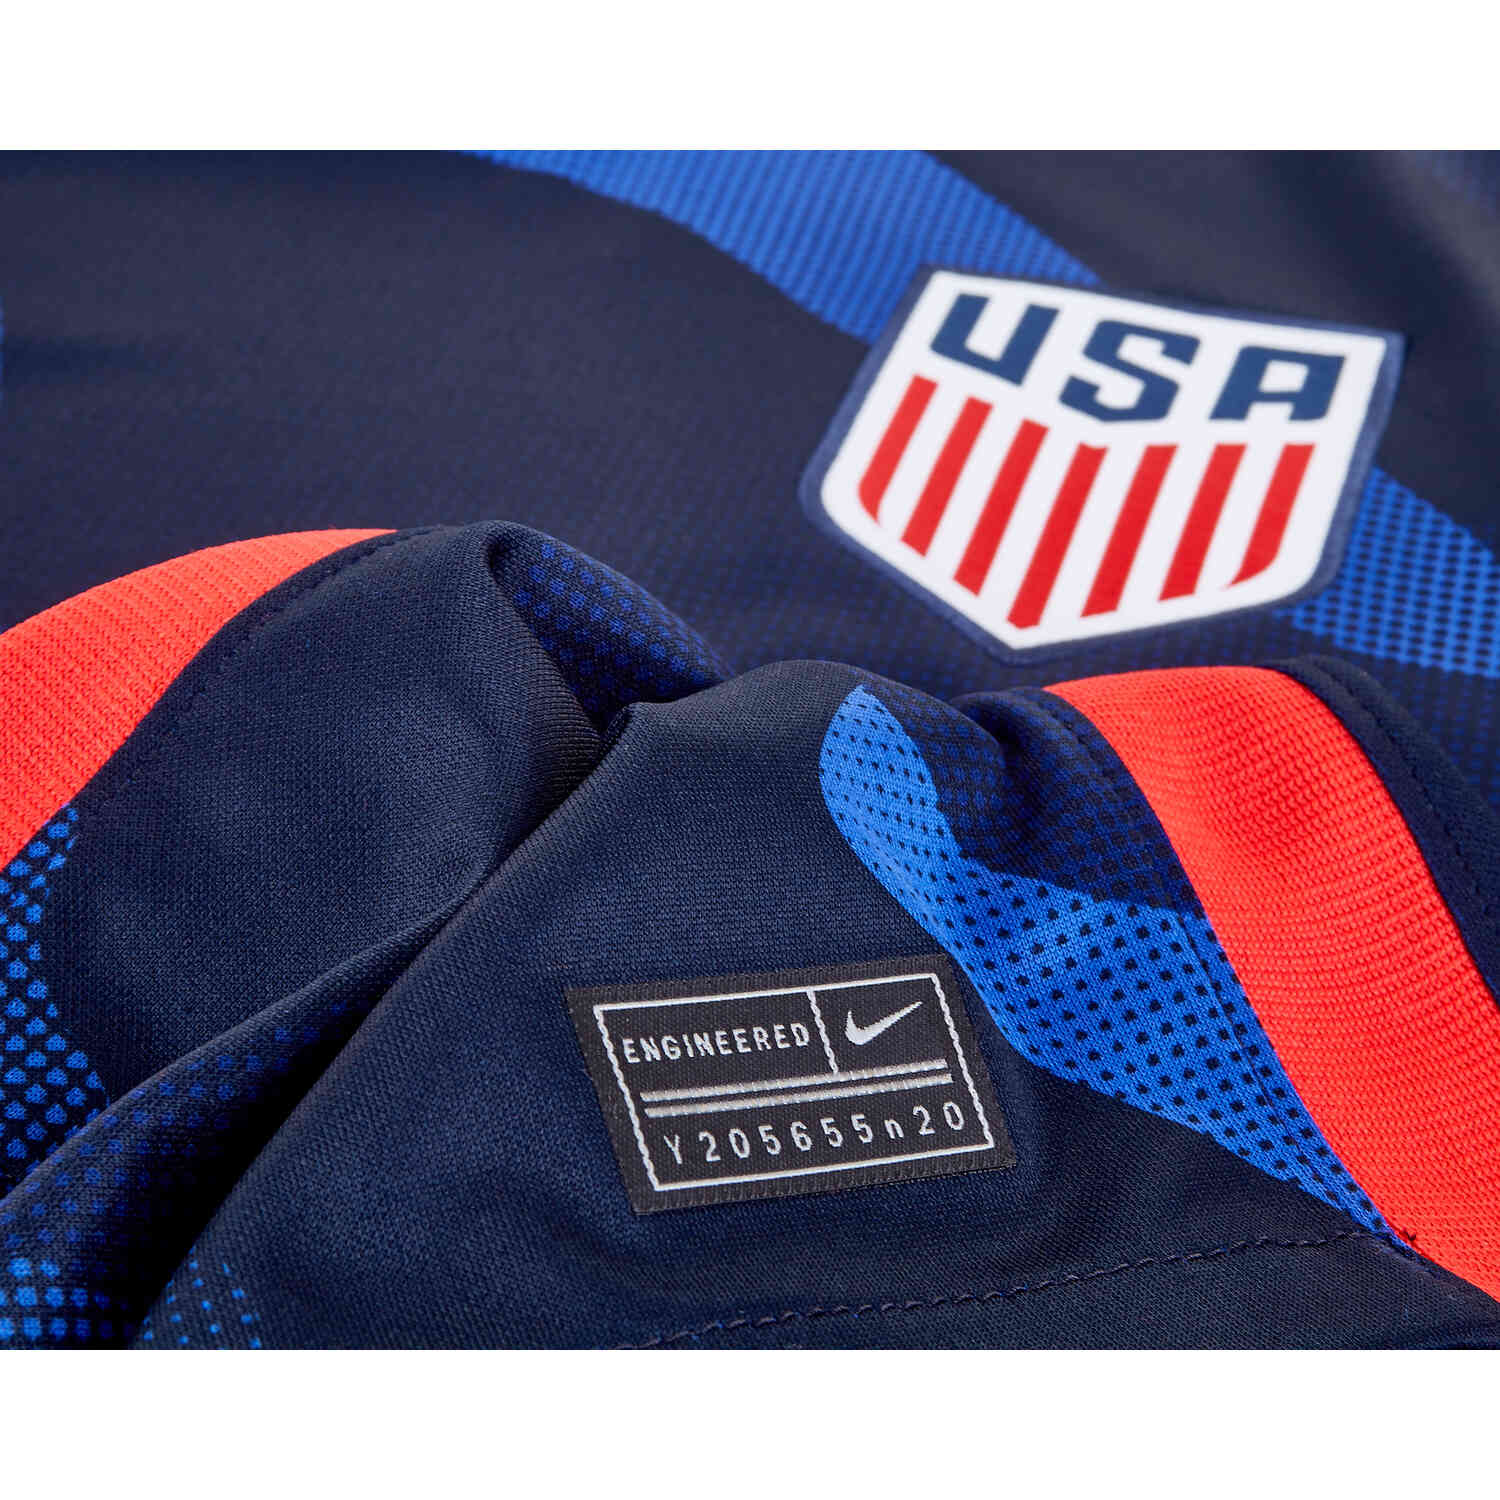 2020 Nike USMNT Away Jersey - SoccerPro